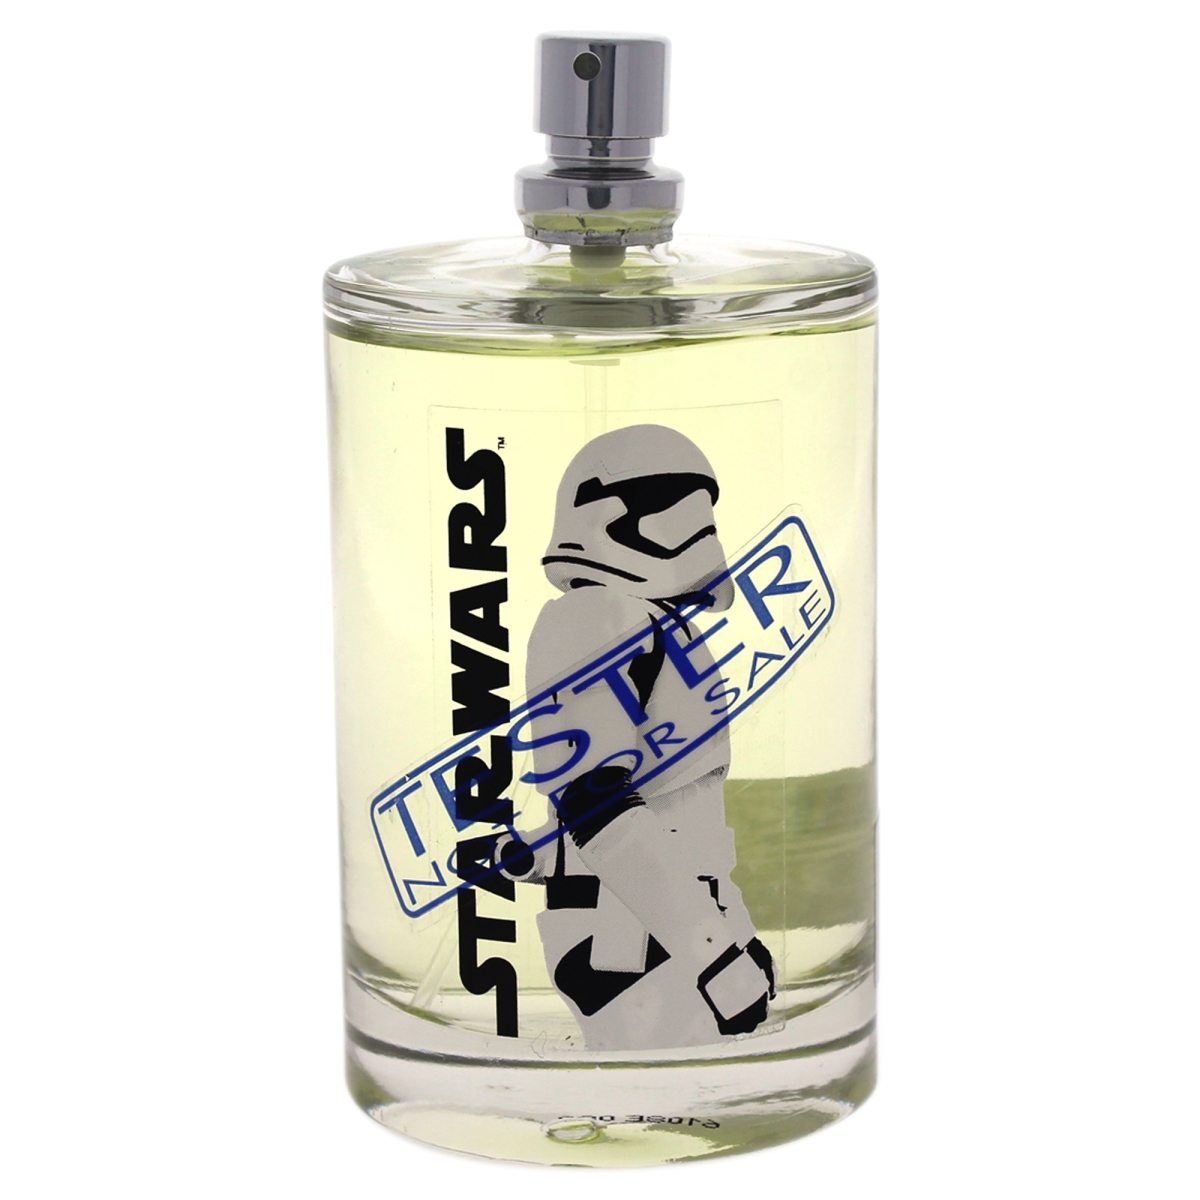 K-t-1025 3.4 Oz Star Wars Edt Spray For Kids